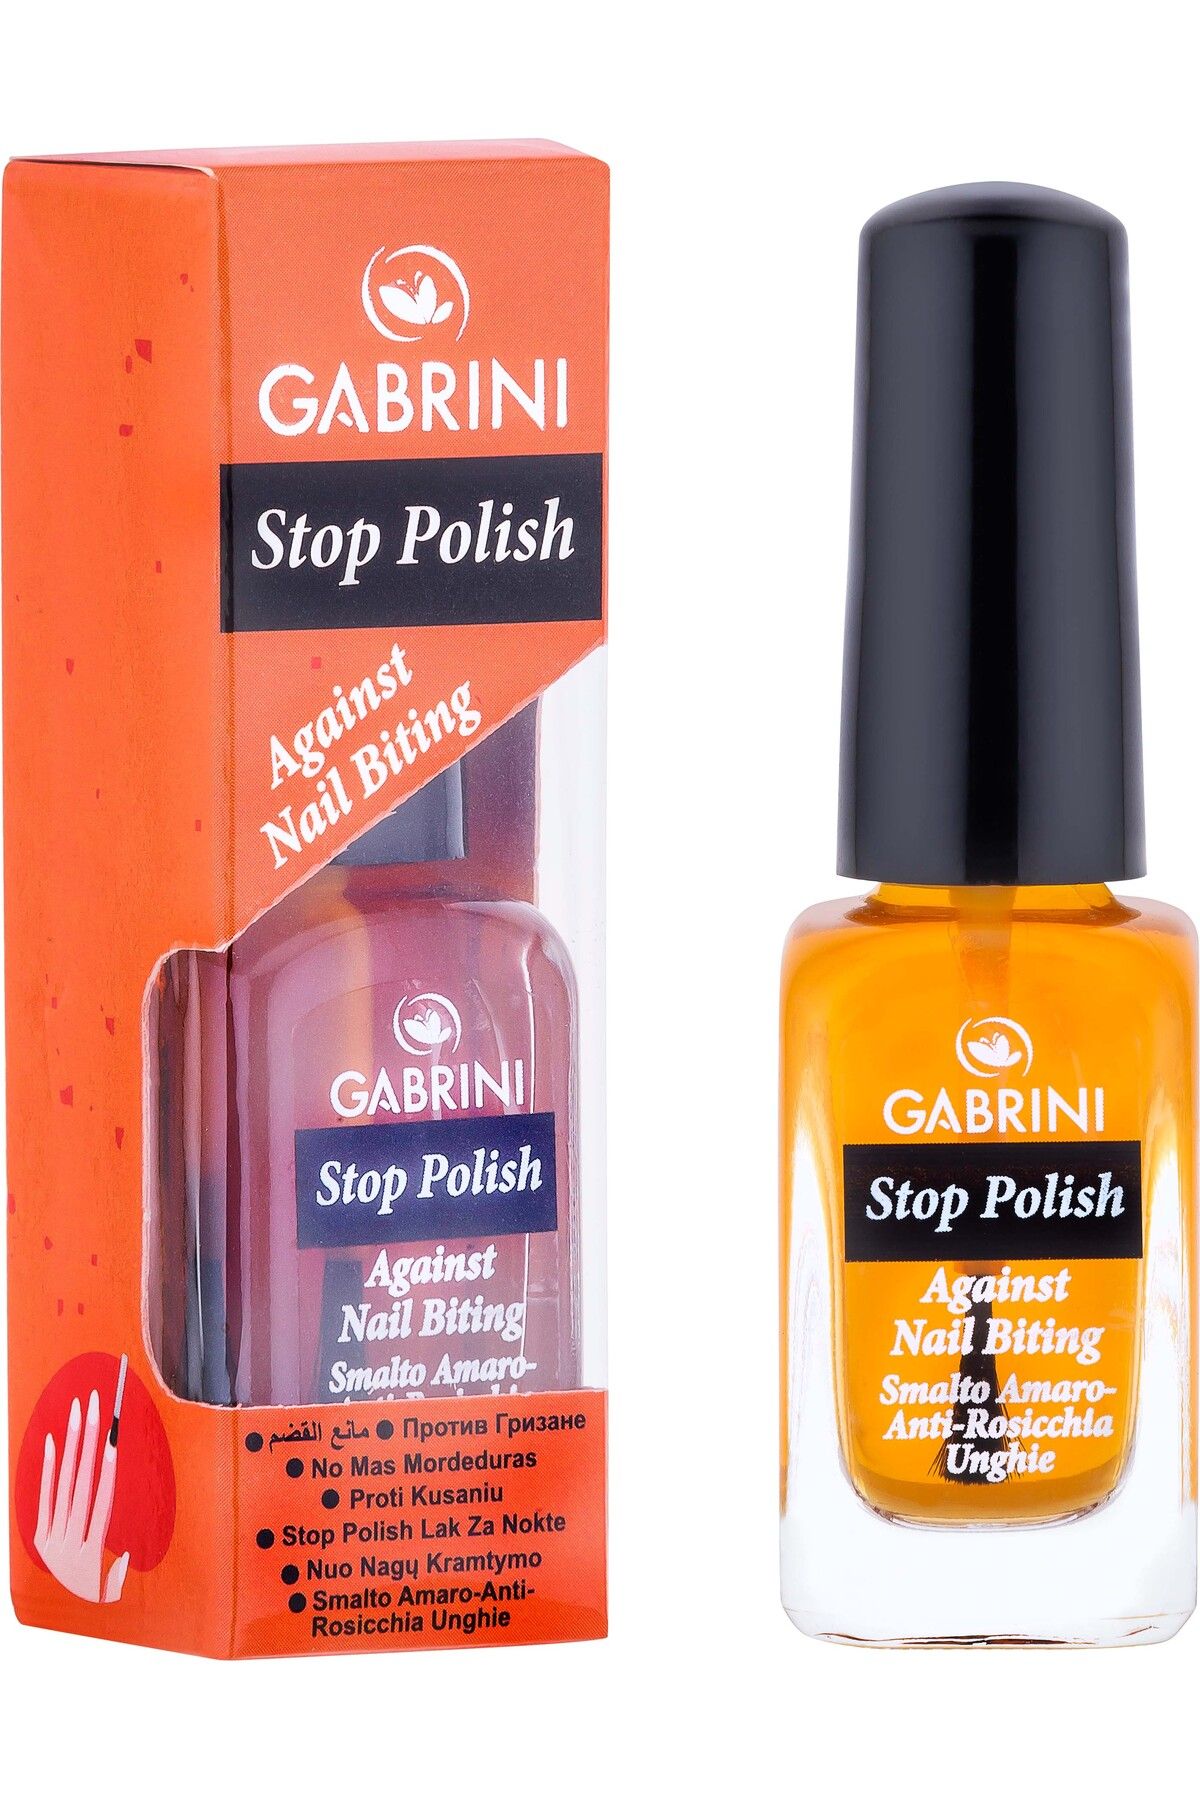 Gabrini Stop Polish Aganist Nail Biting